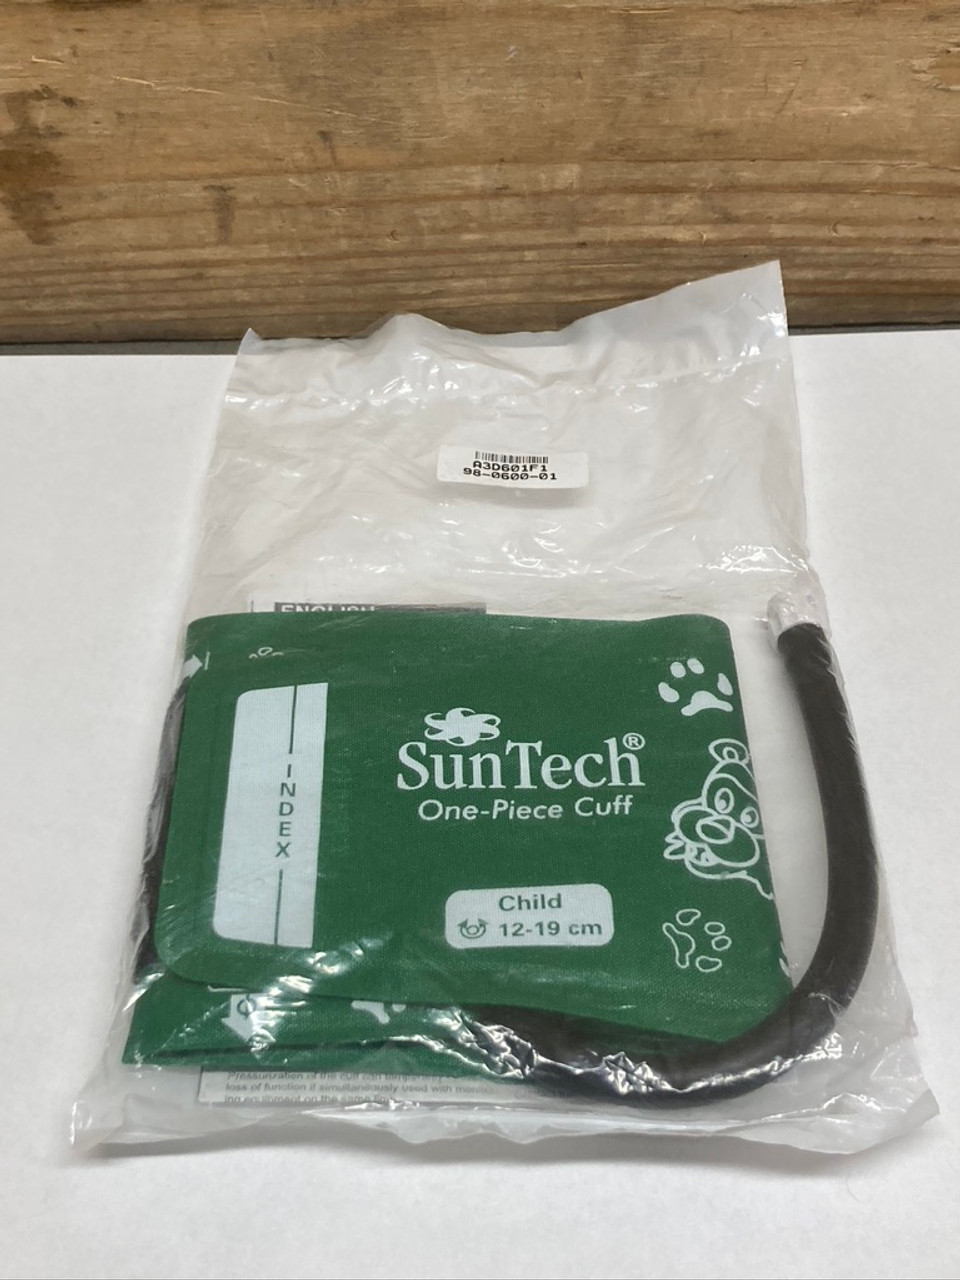 One-Piece Blood Pressure Cuff 98-0600-01 SunTech 12-19 cm Green